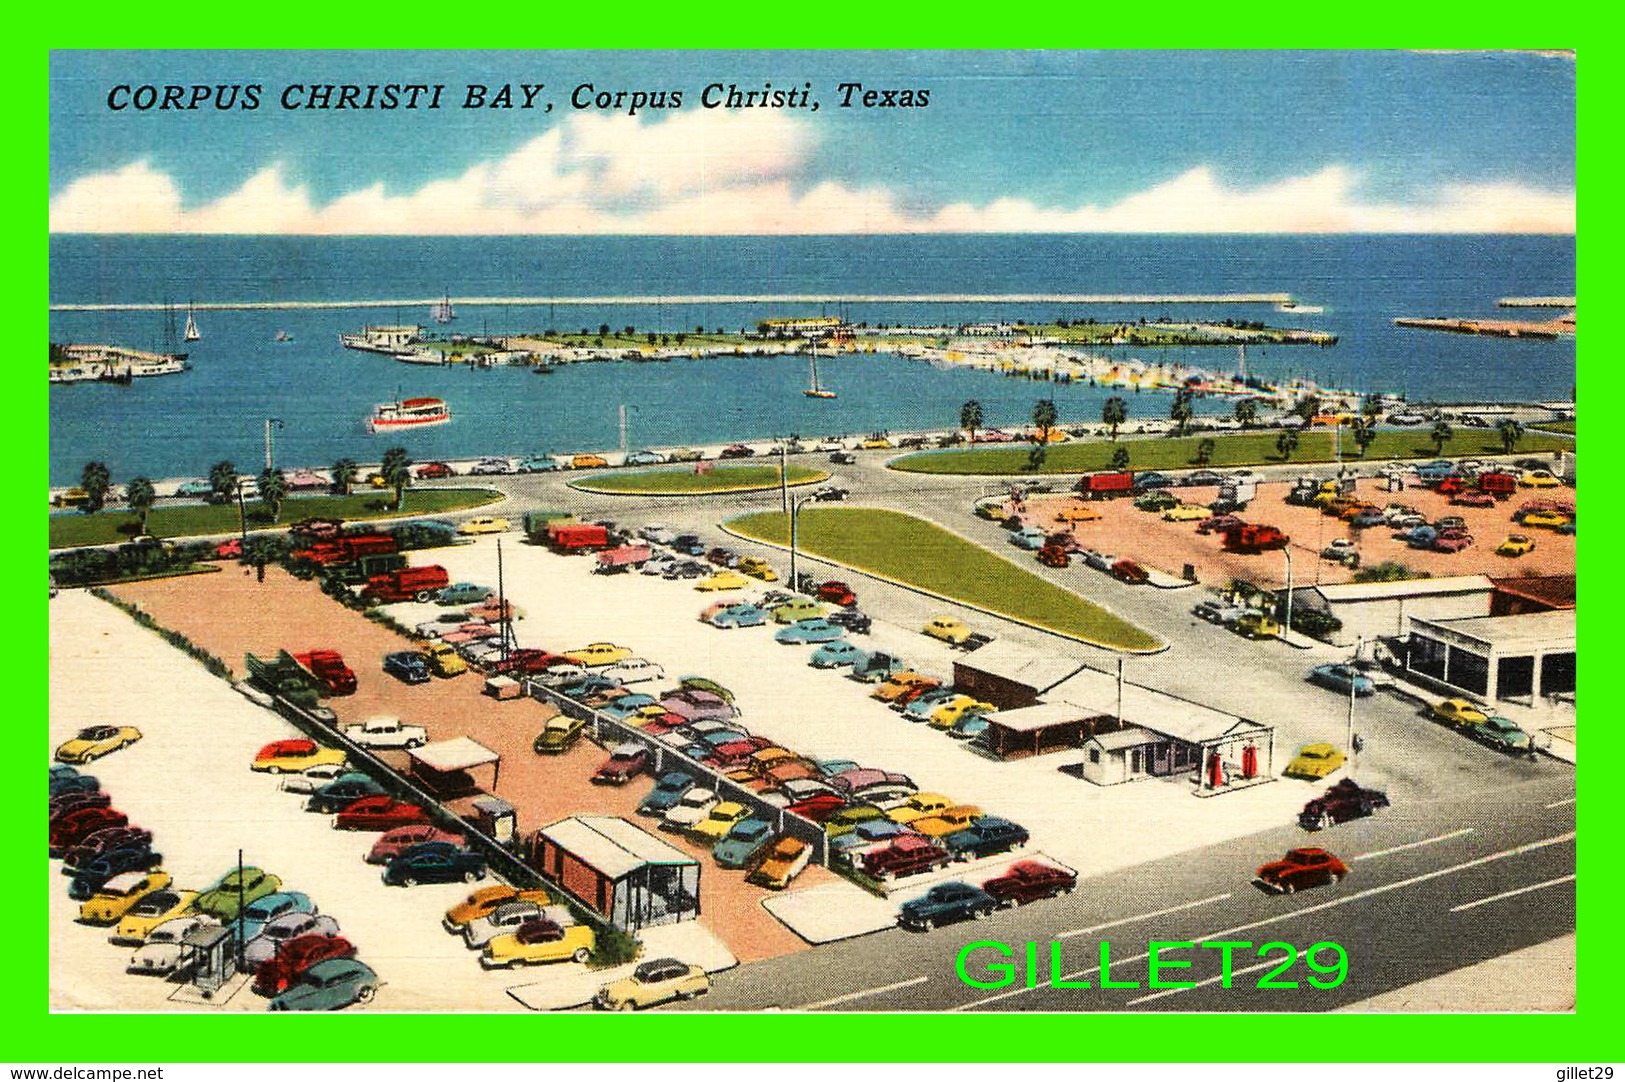 CORPUS CHRISTI, TX - CORPUS CHRISTI BAY - WELL ANIMATED - TRAVEL IN 1958 - COLE'S OFFICE EQUIPMENT CO - - Corpus Christi